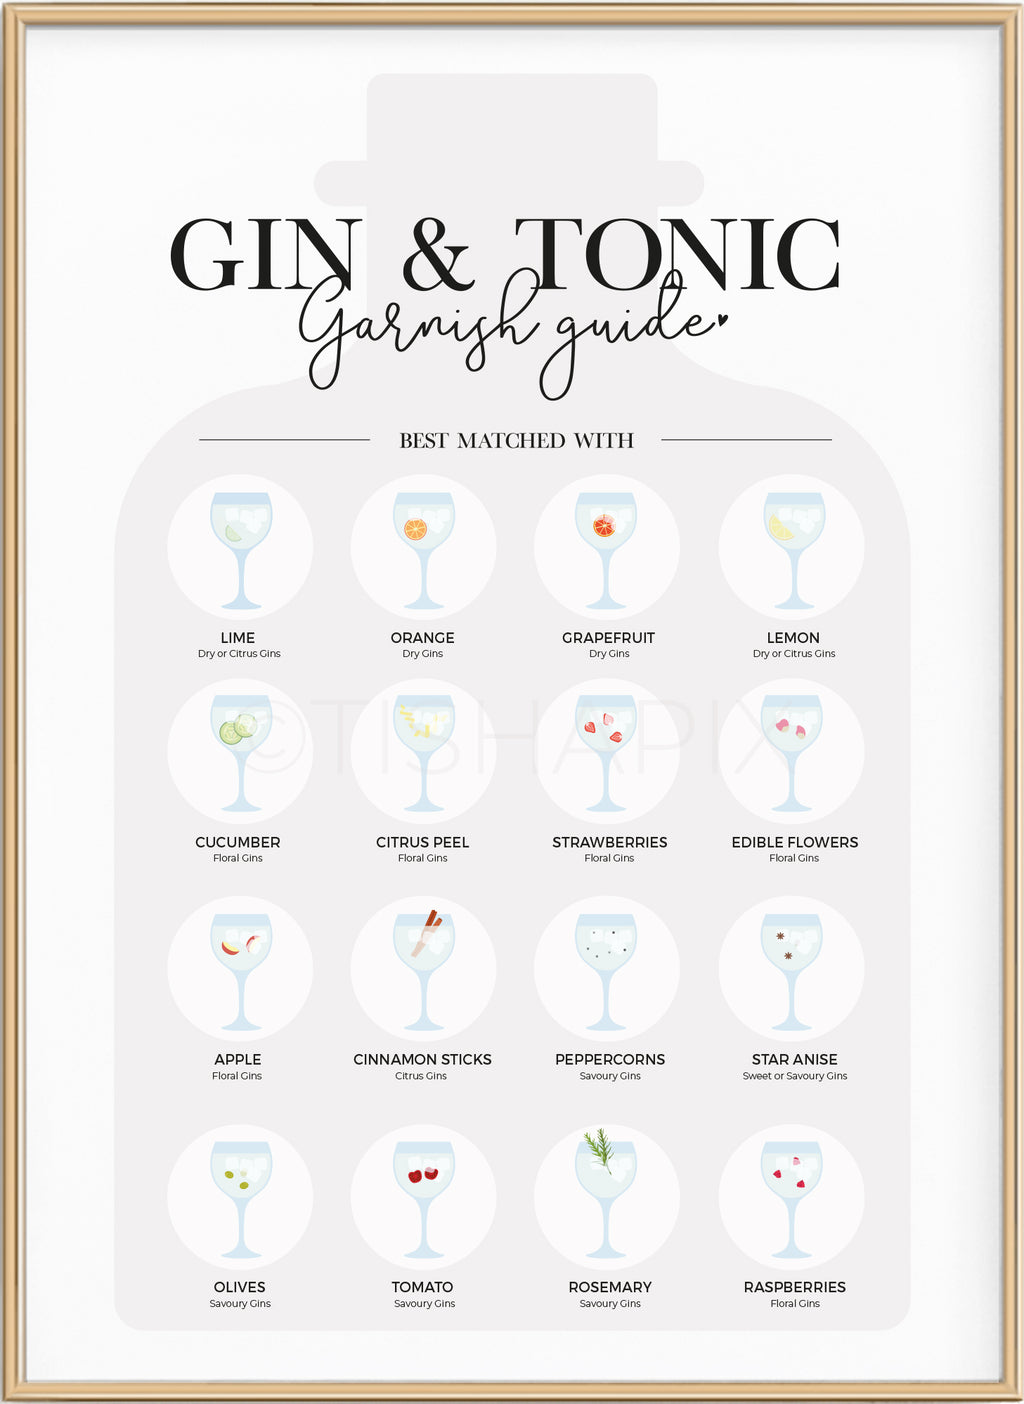 Gin and Tonic Garnish Guide